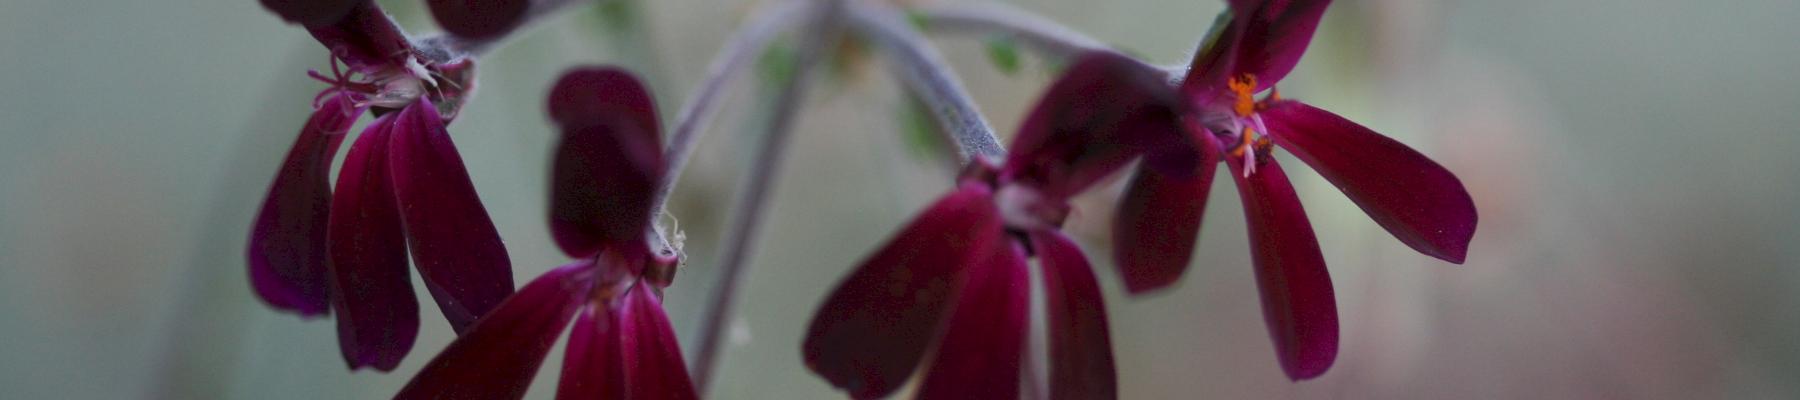 Pelargonium sidoides © woottensplants